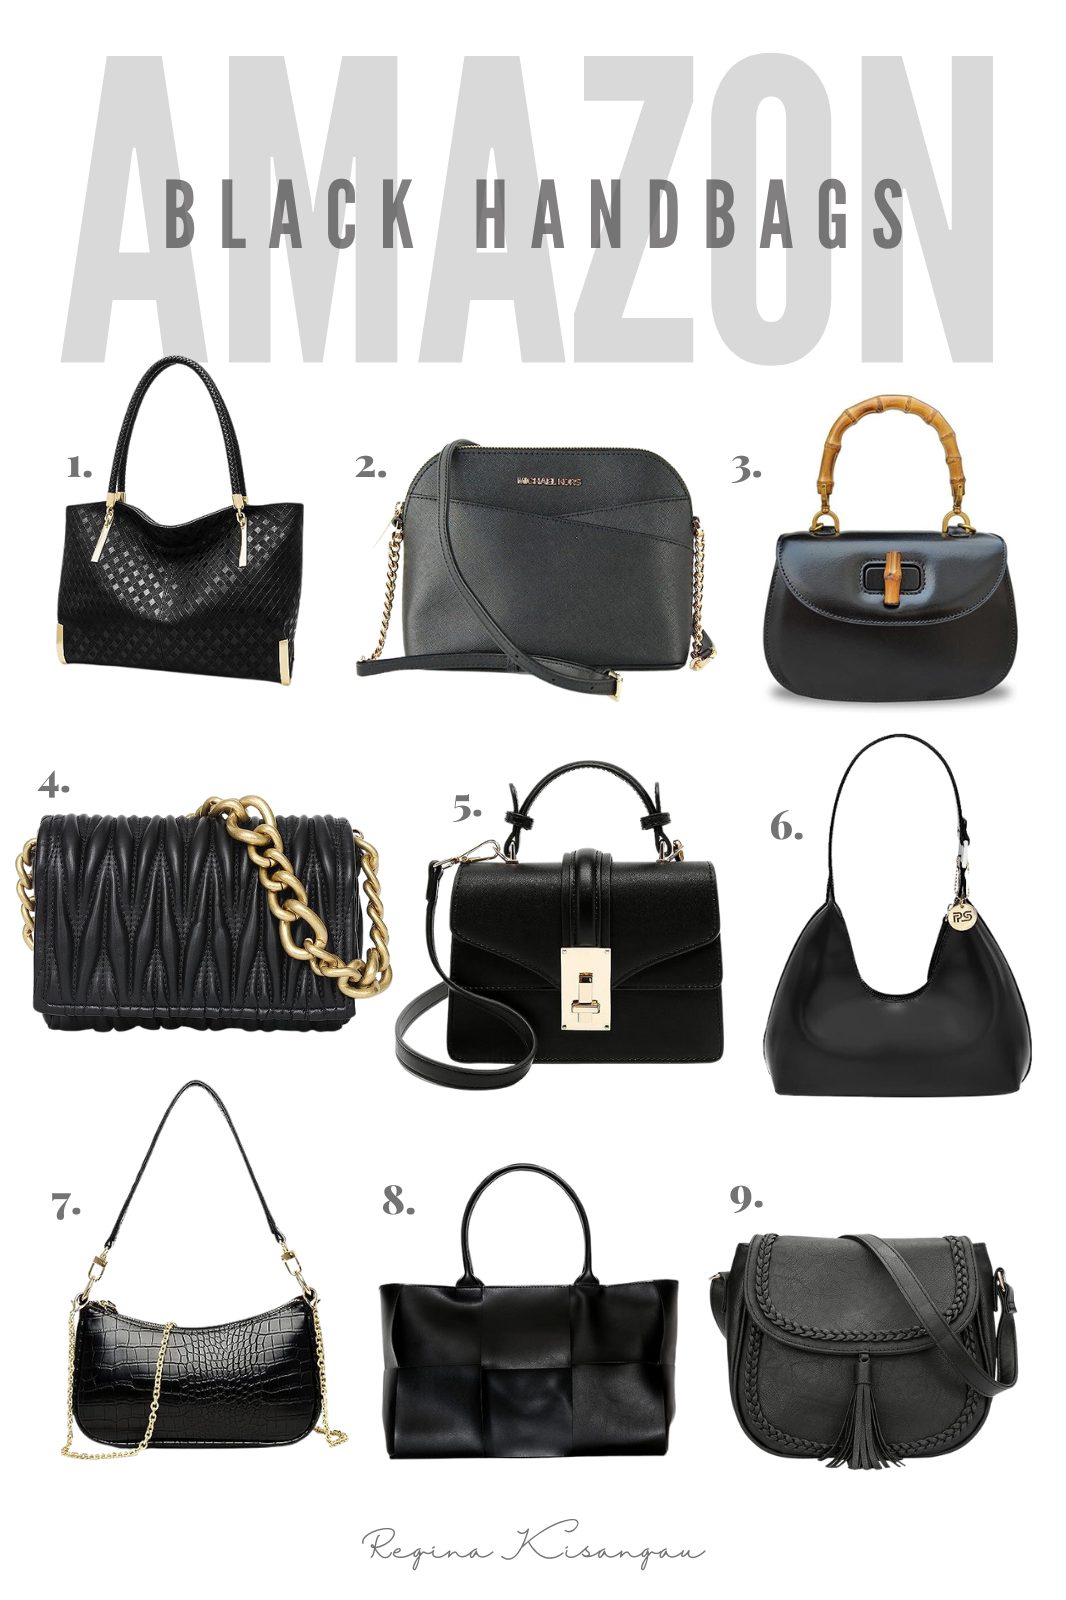 Black Handbags on Amazon 